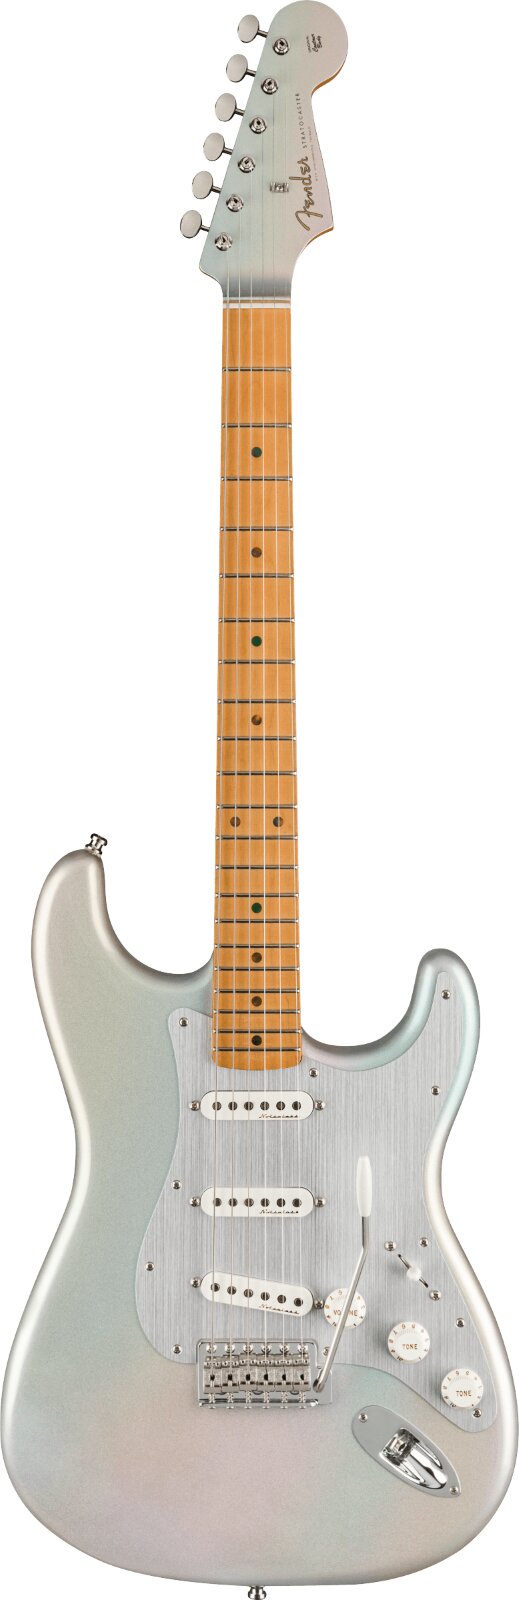 Fender H.E.R. Stratocaster Maple Fingerboard Chrome Glow : photo 1